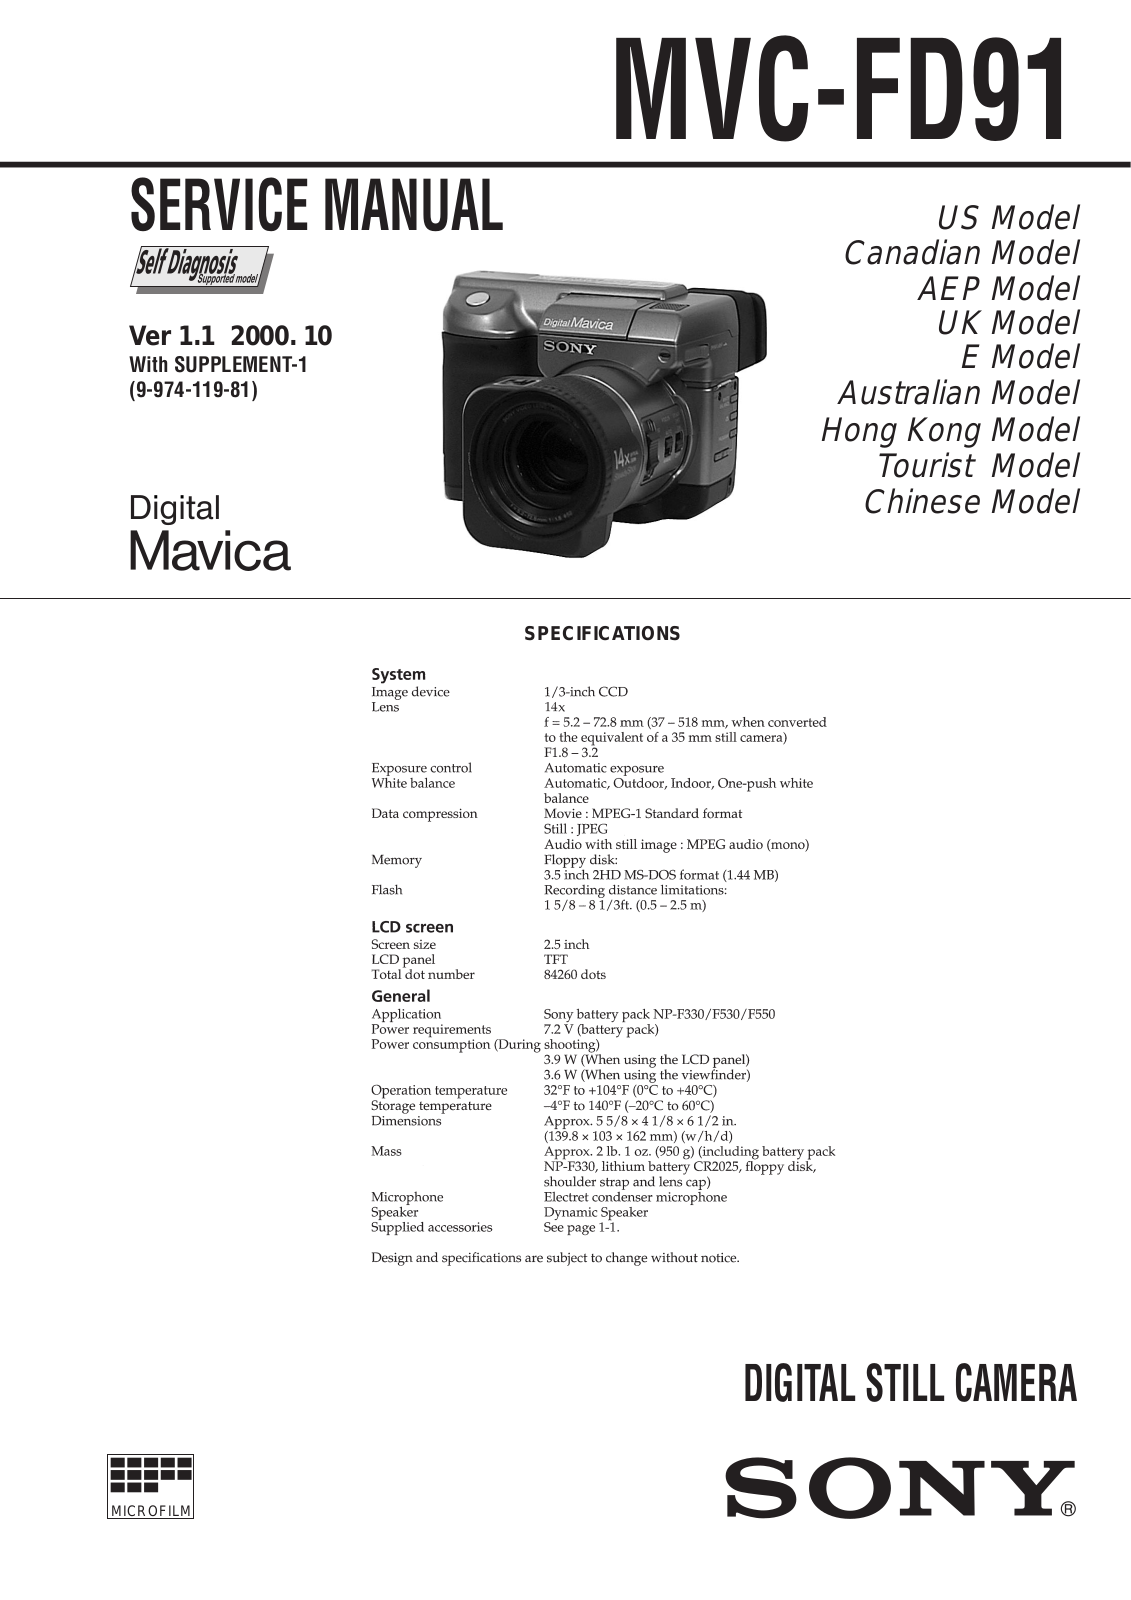 SONY 996577702, MVC-FD91 Service Manual